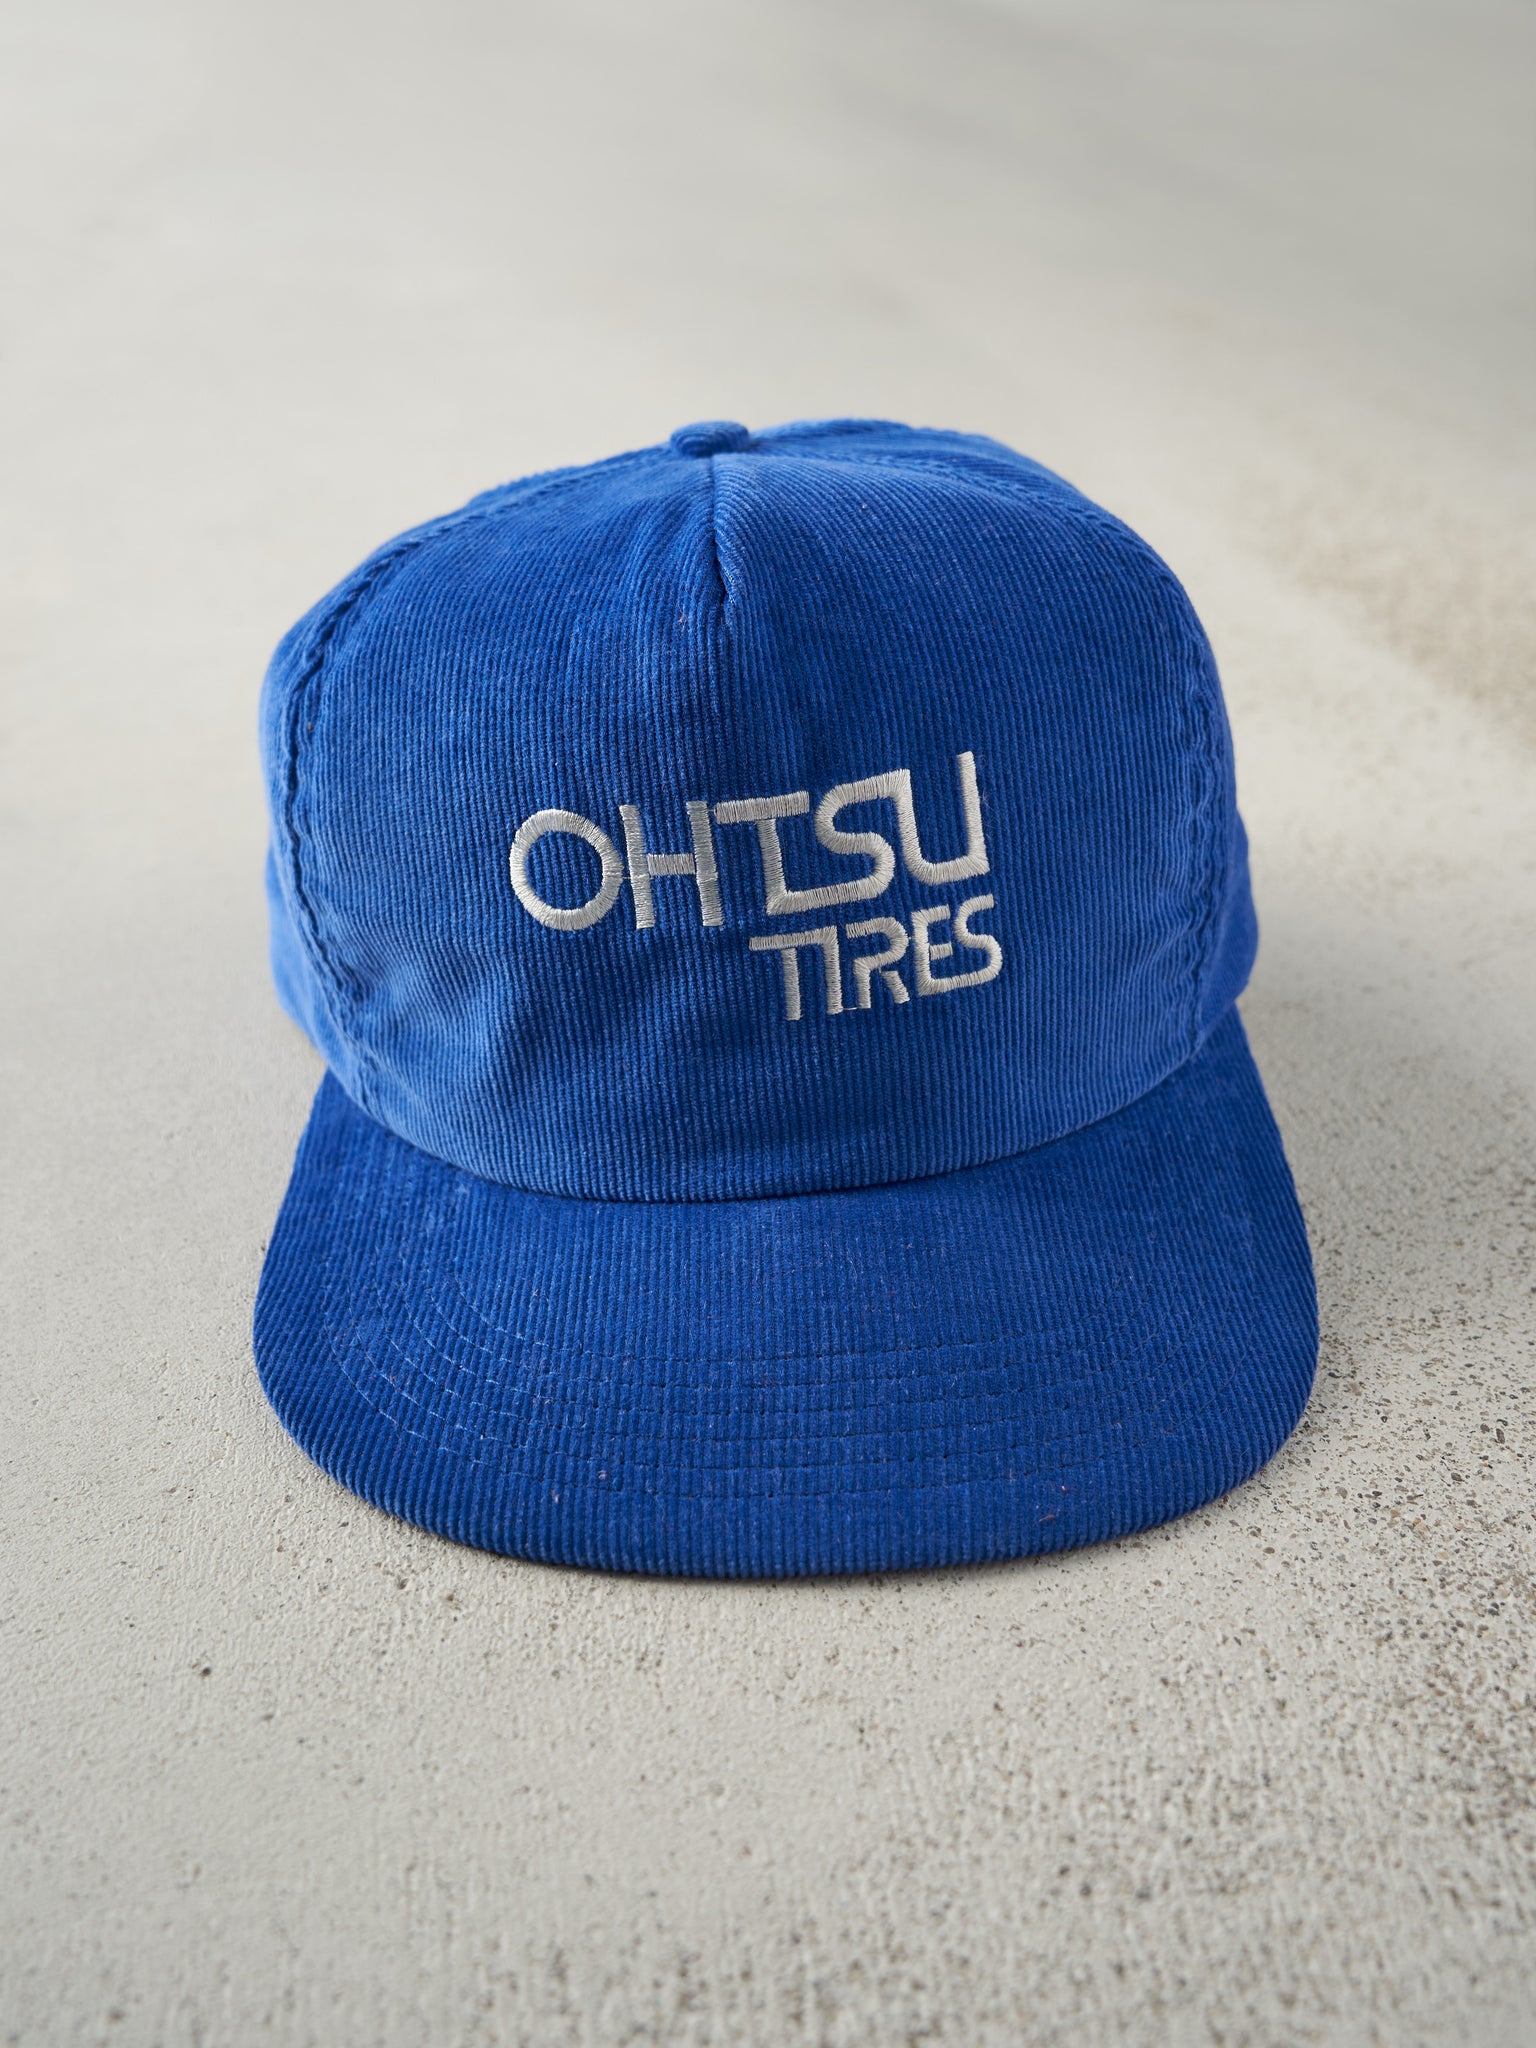 Vintage 80s Blue Embroidered OHTSU Tires Corduroy Snapback Hat